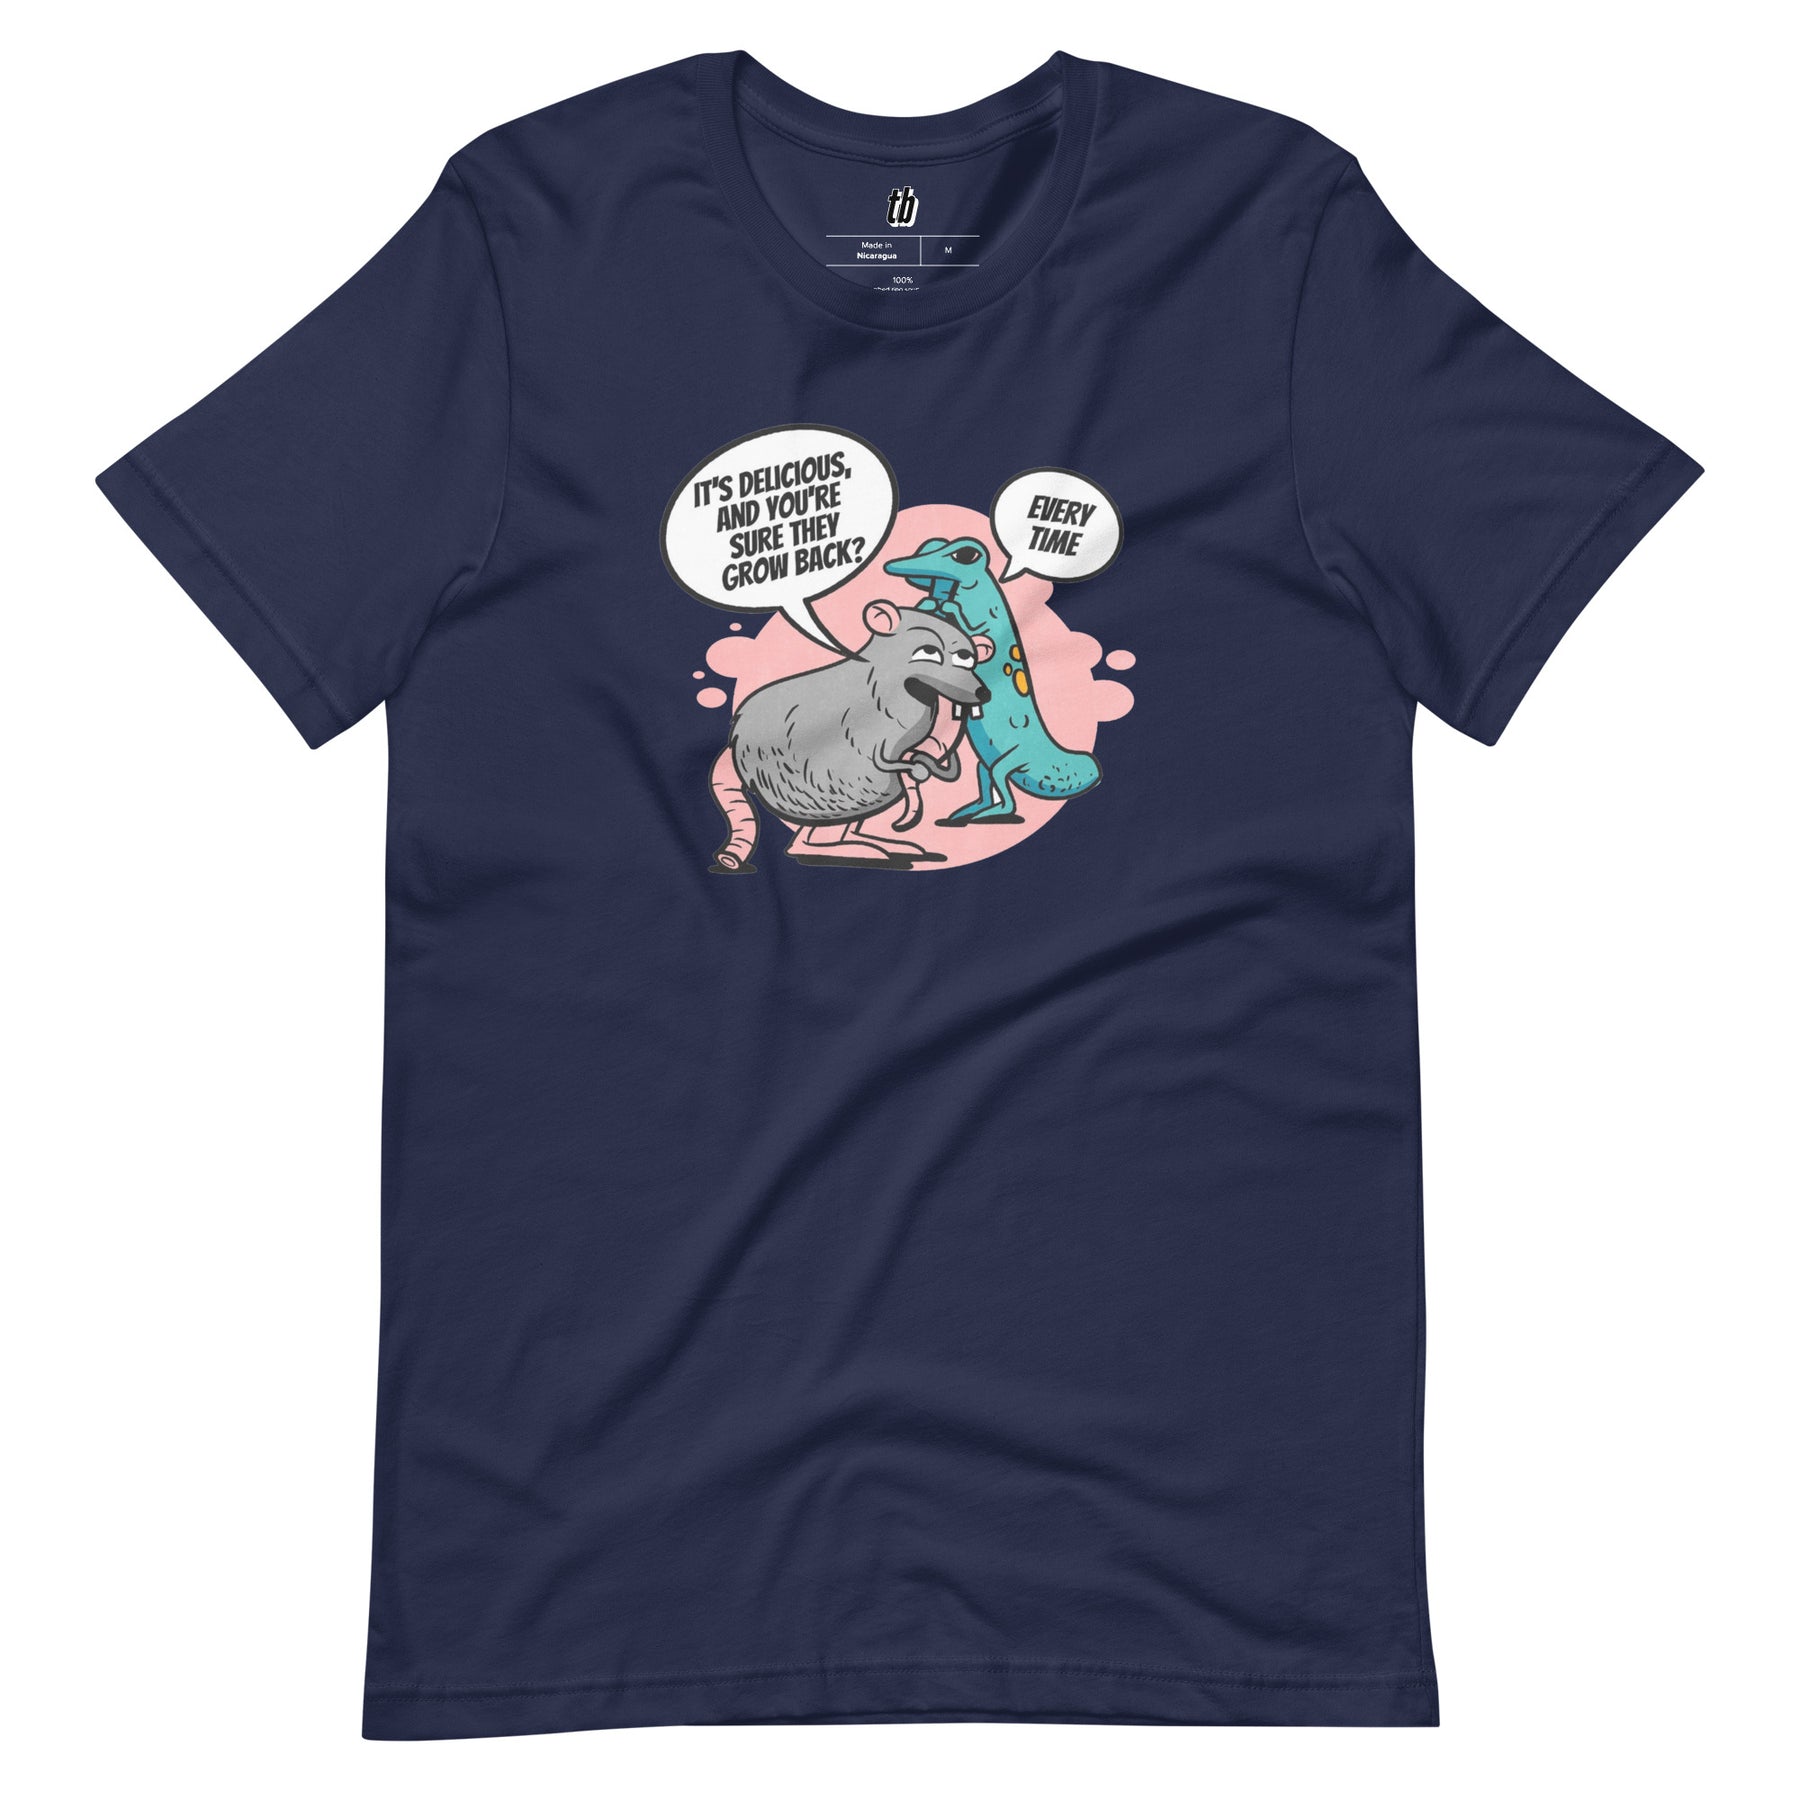 Rat & Lizard T-Shirt - Teebop